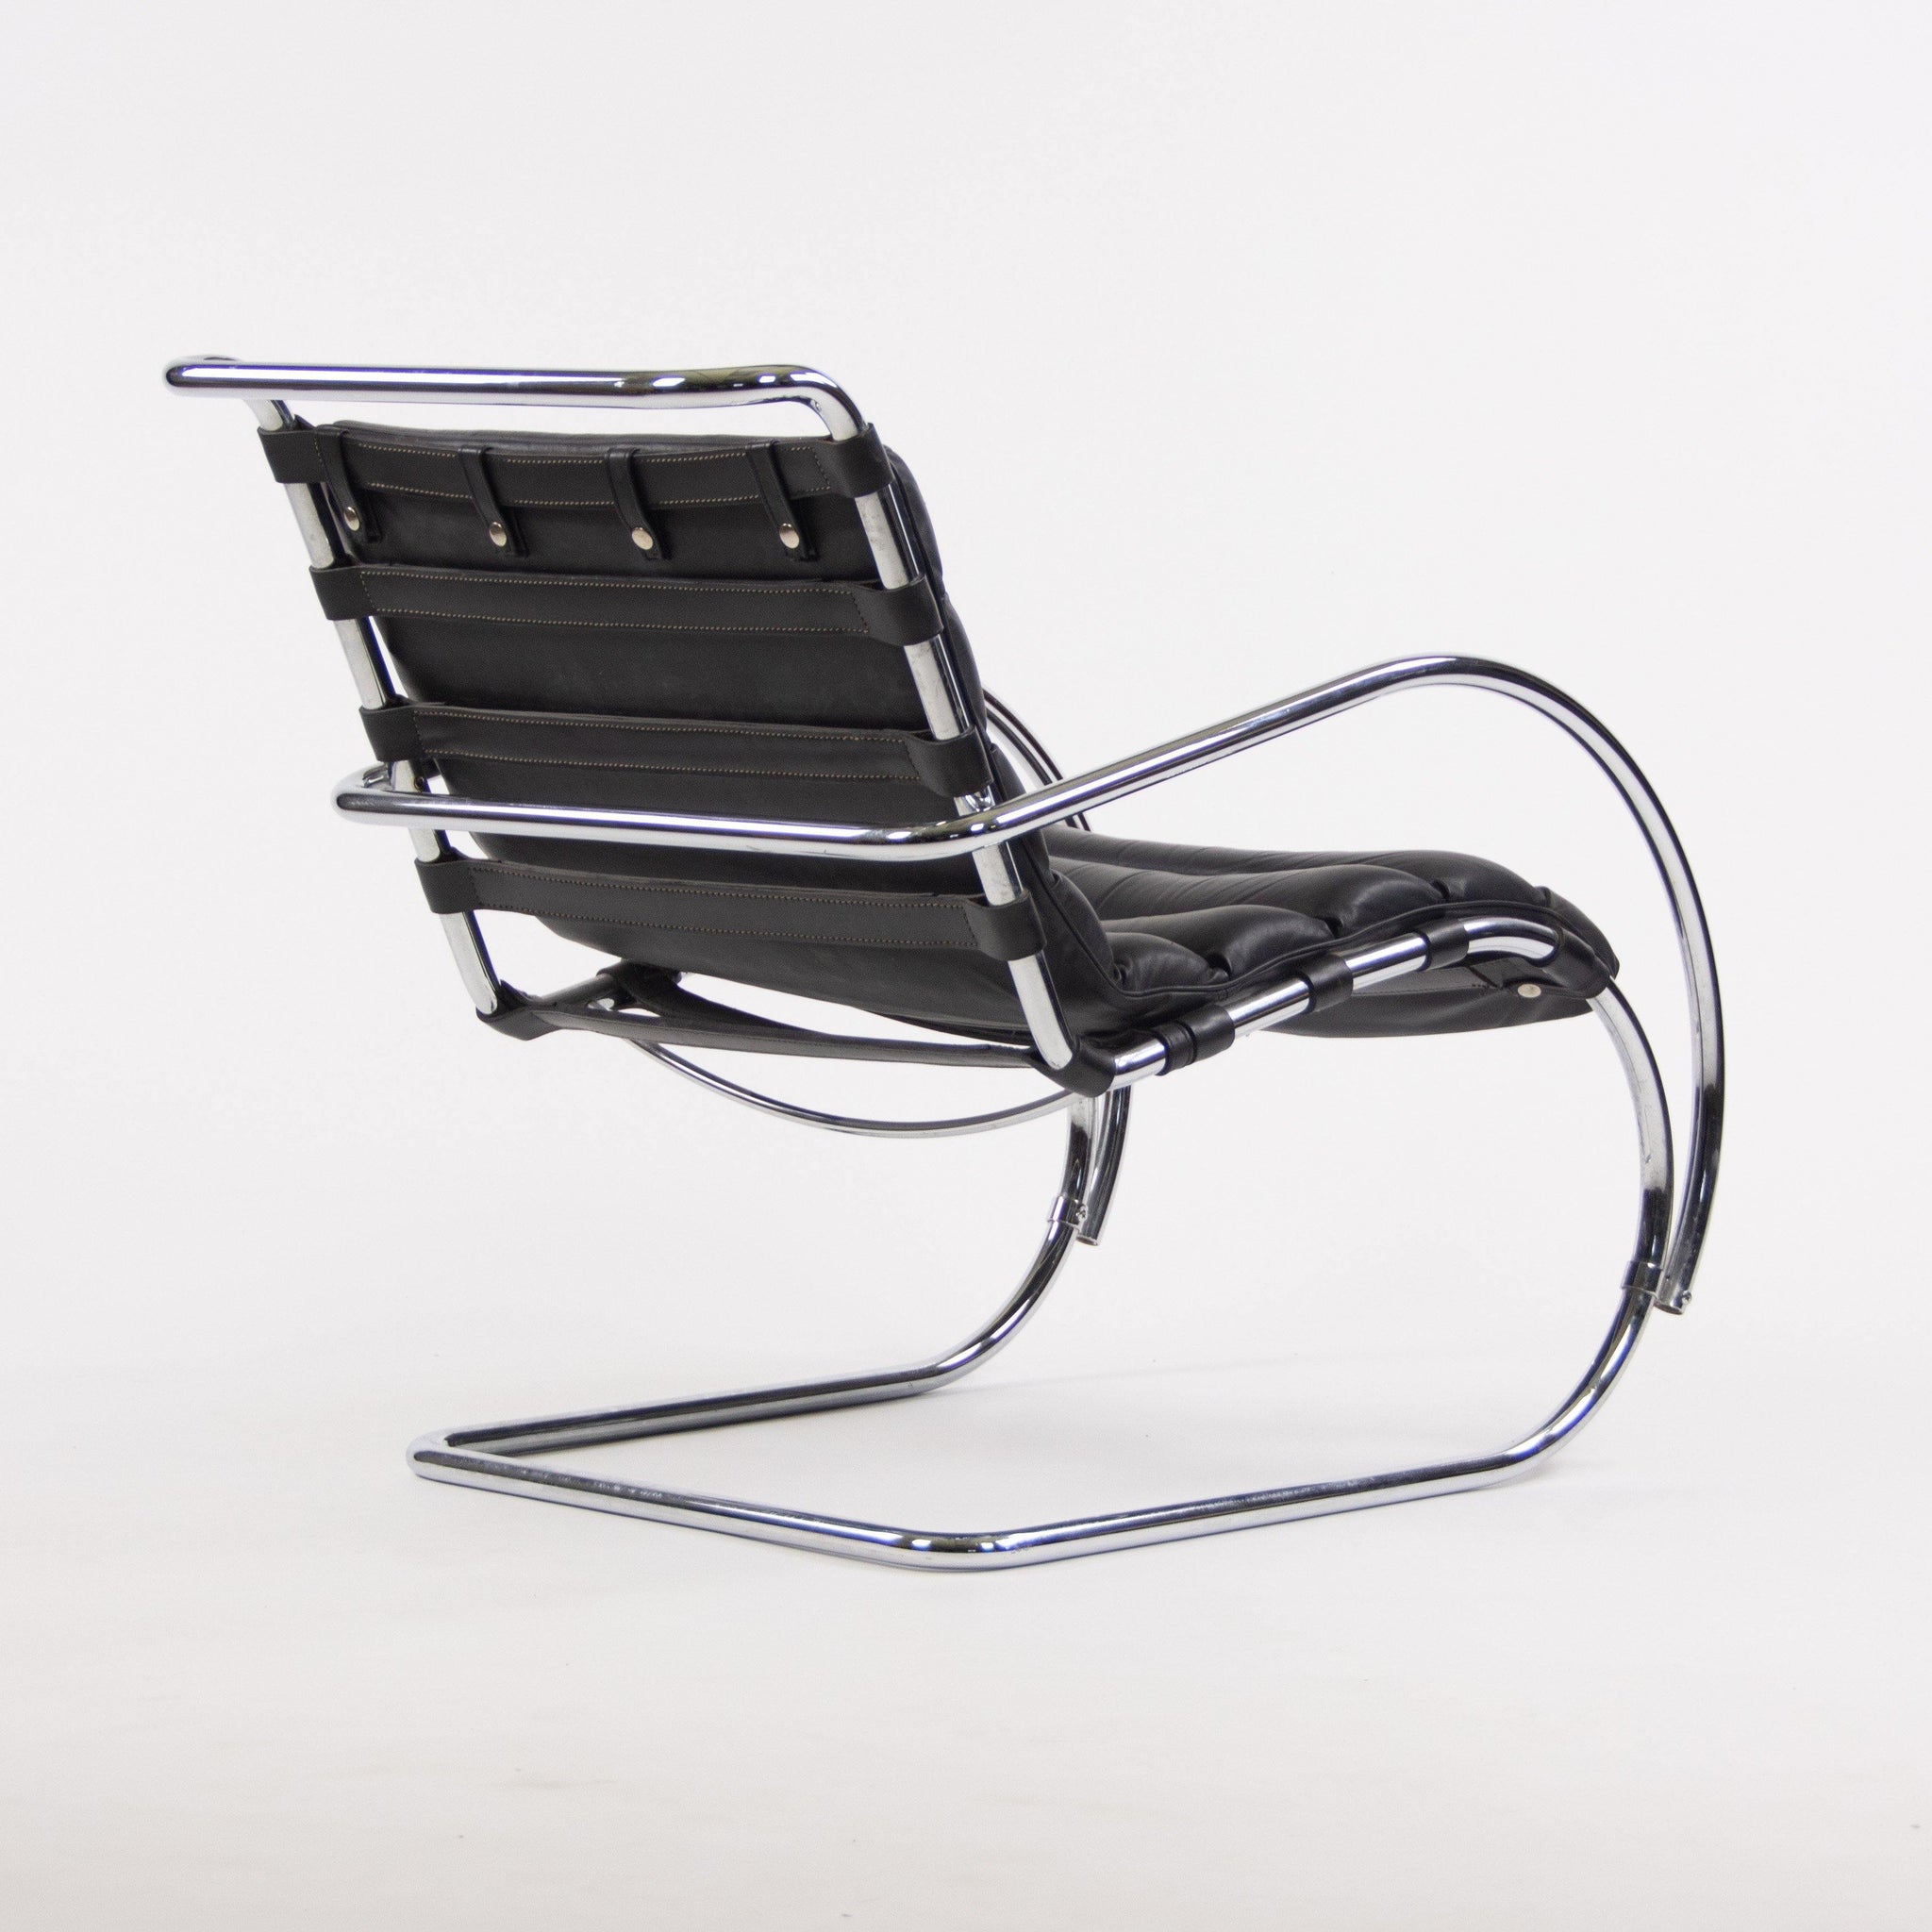 Mies Van Der Rohe Vintage MR Lounge Chair with Arms Black Leather Chrome Knoll - Rarify Inc.